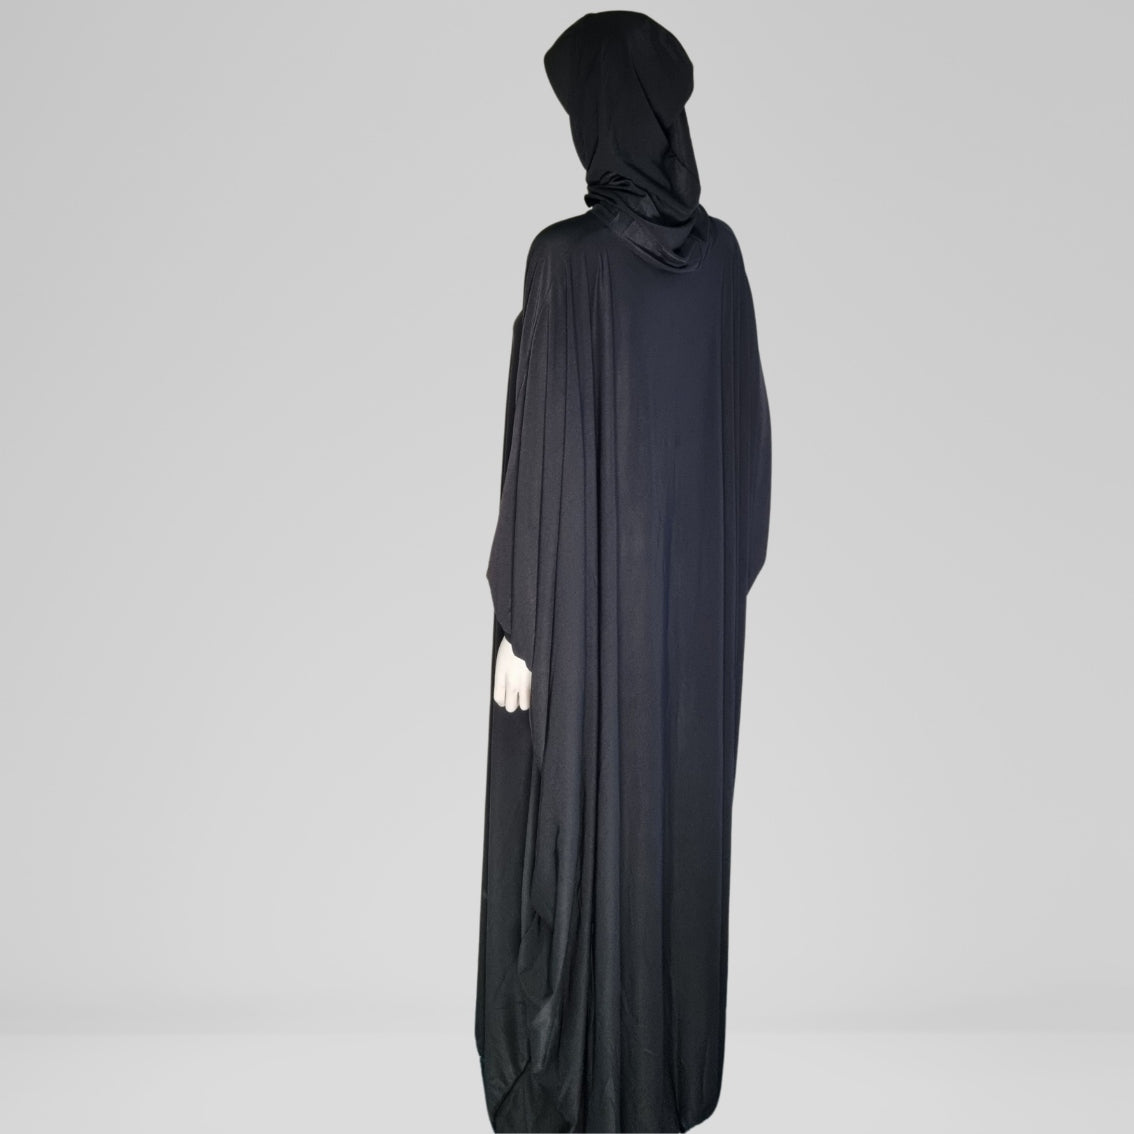 Women's One-Piece Prayer Dress